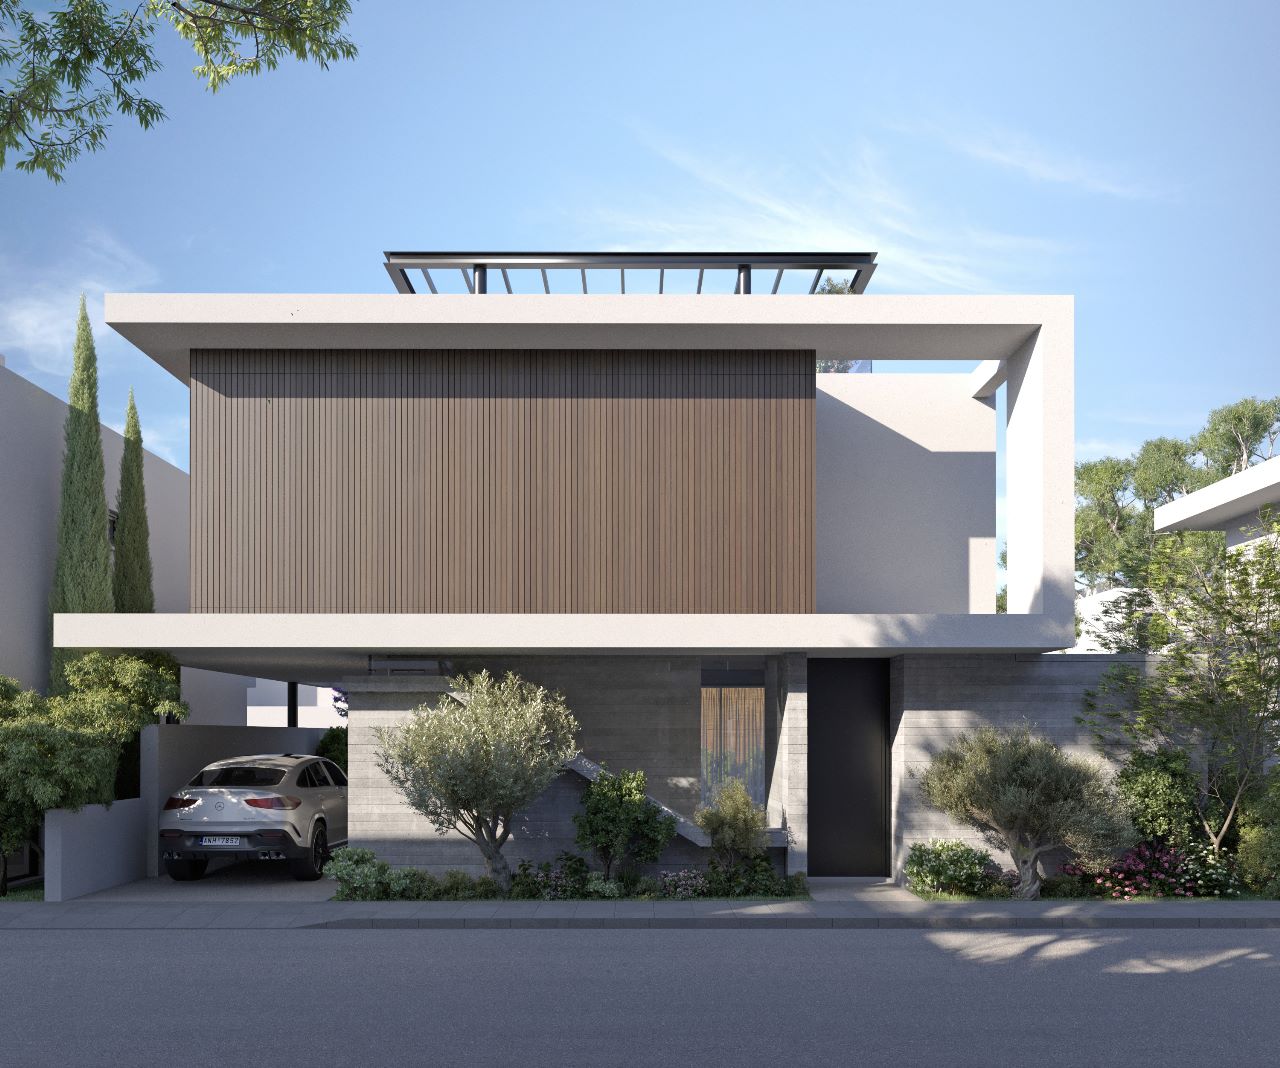 Introducing Emerald Pearl, a New Housing Development of Luxury Villas in Ayia Napa Nissi Beach Area